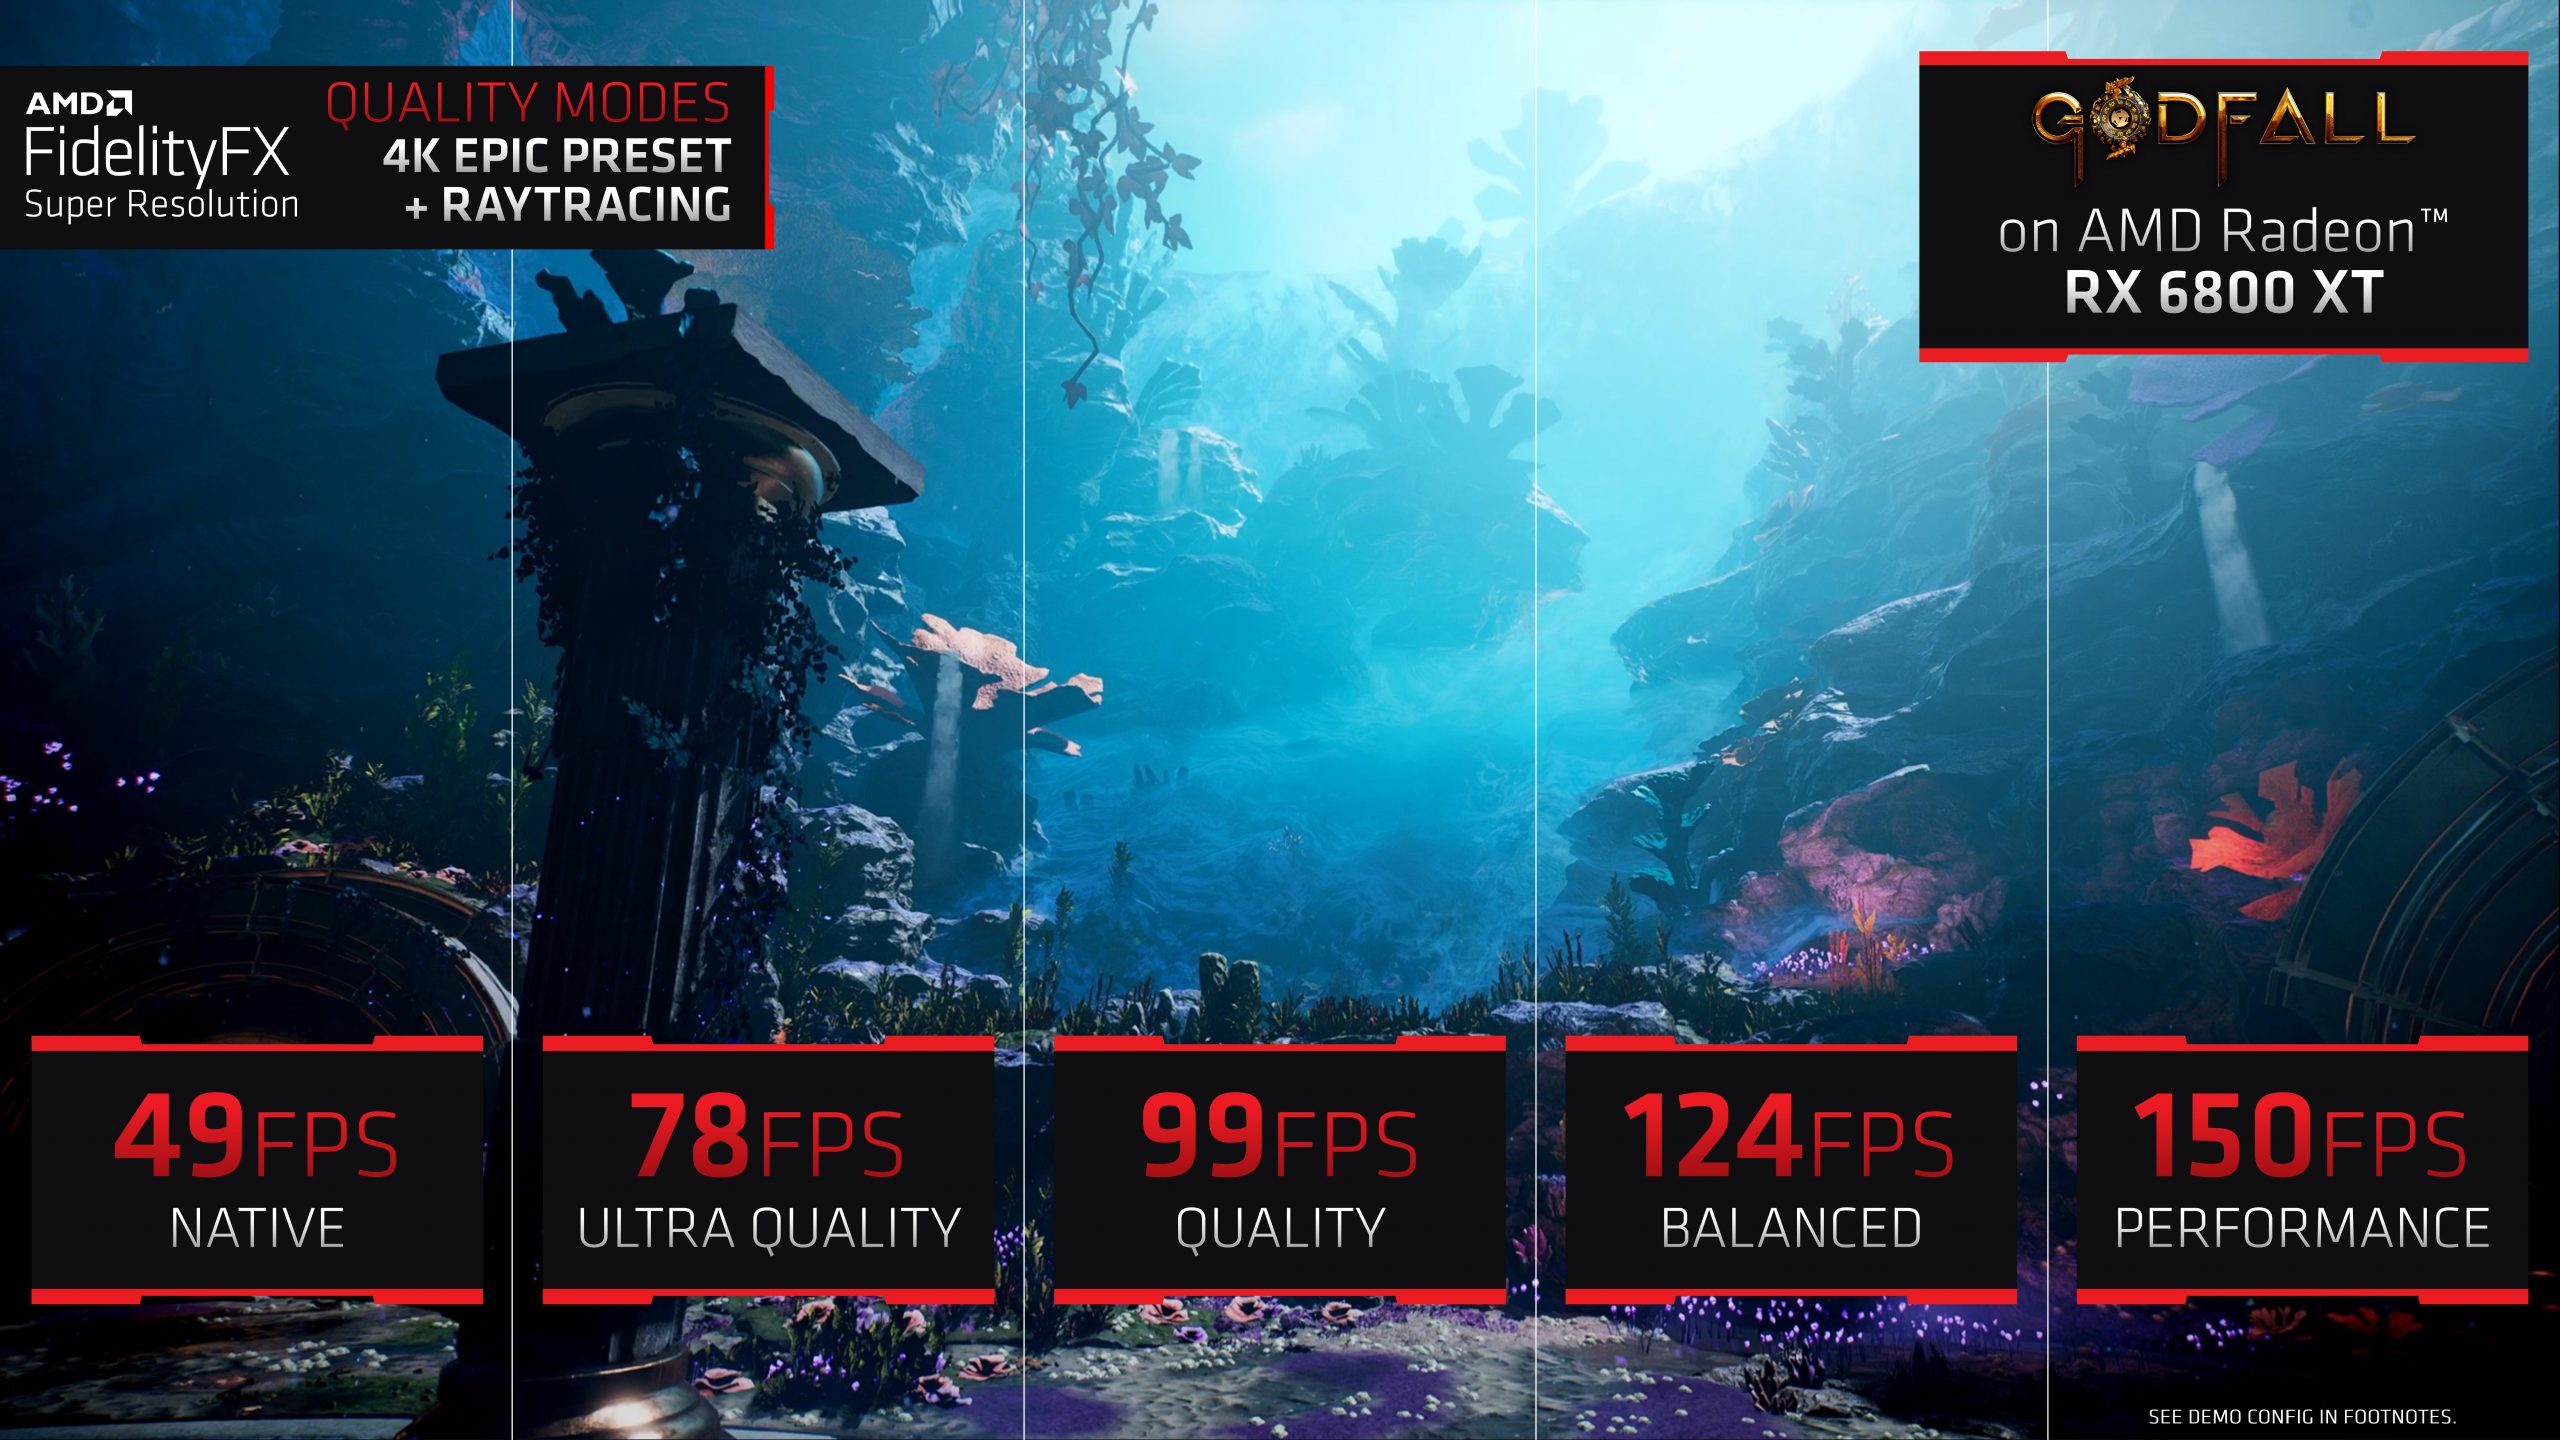 AMD-FSR-3.jpg